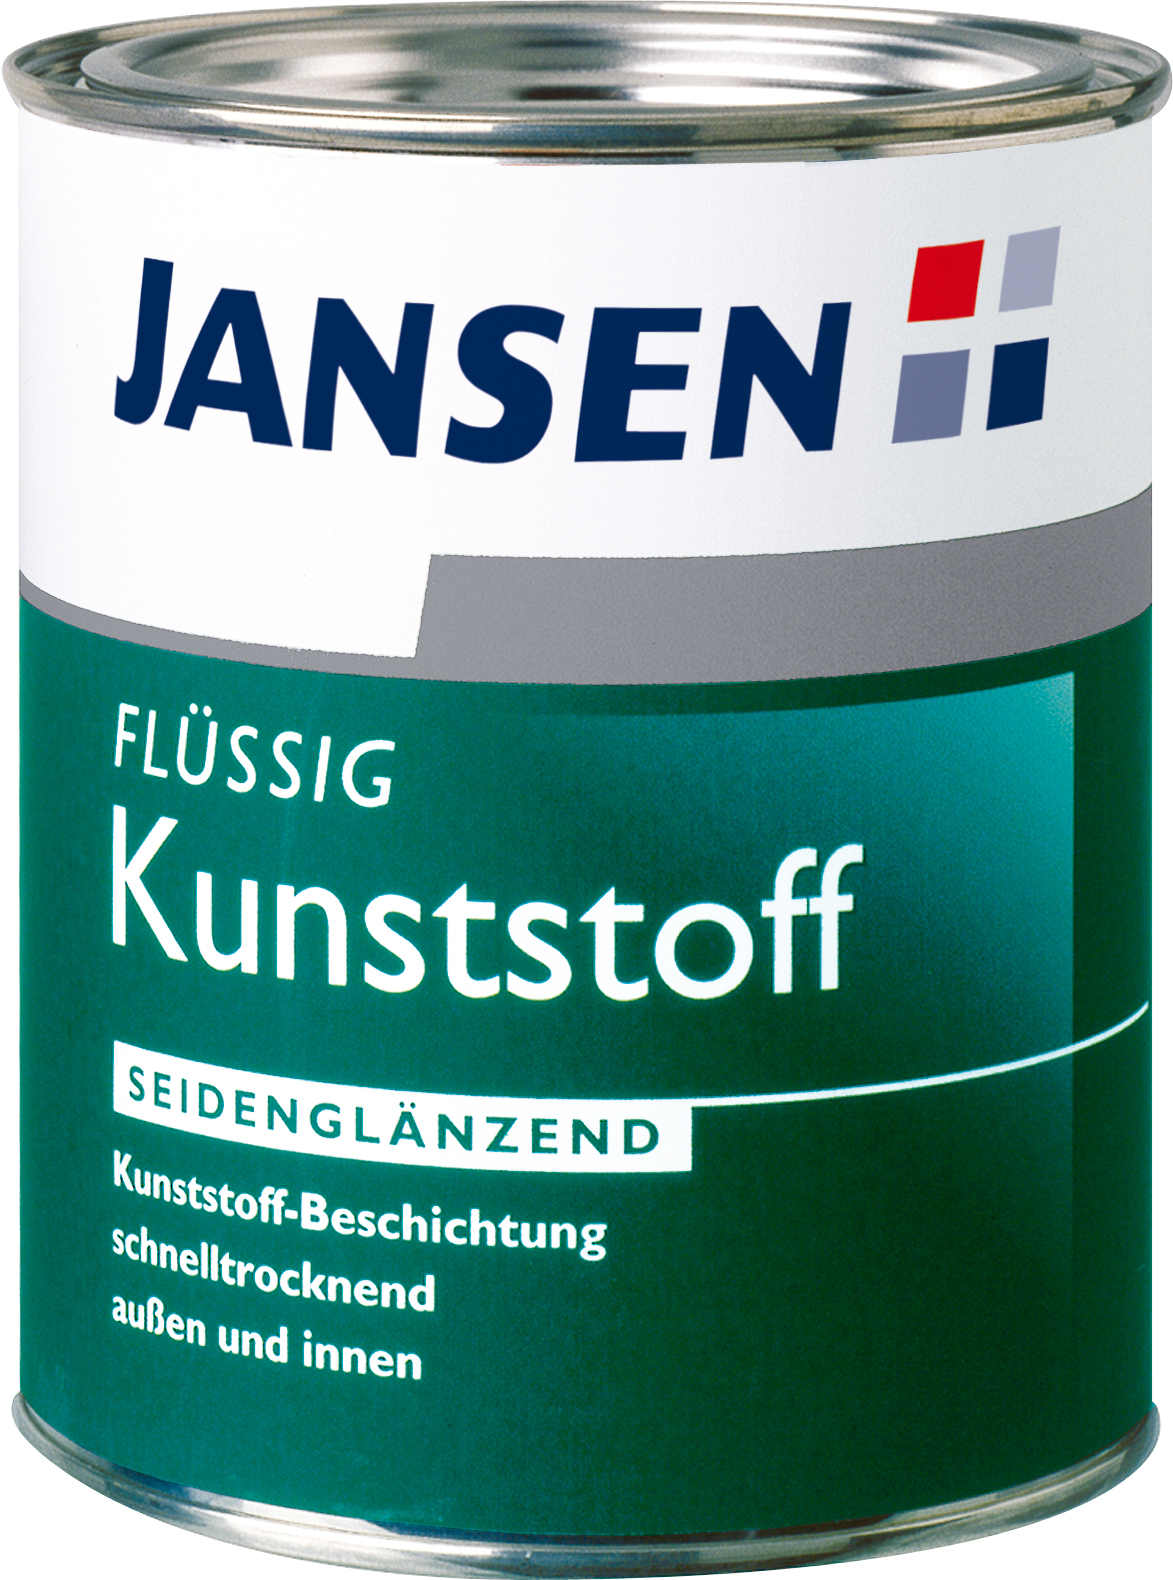 https://wohn-werk.de/out/pictures/master/product/1/Jansen-Fluessig-Kunststoff-1-1443.jpg